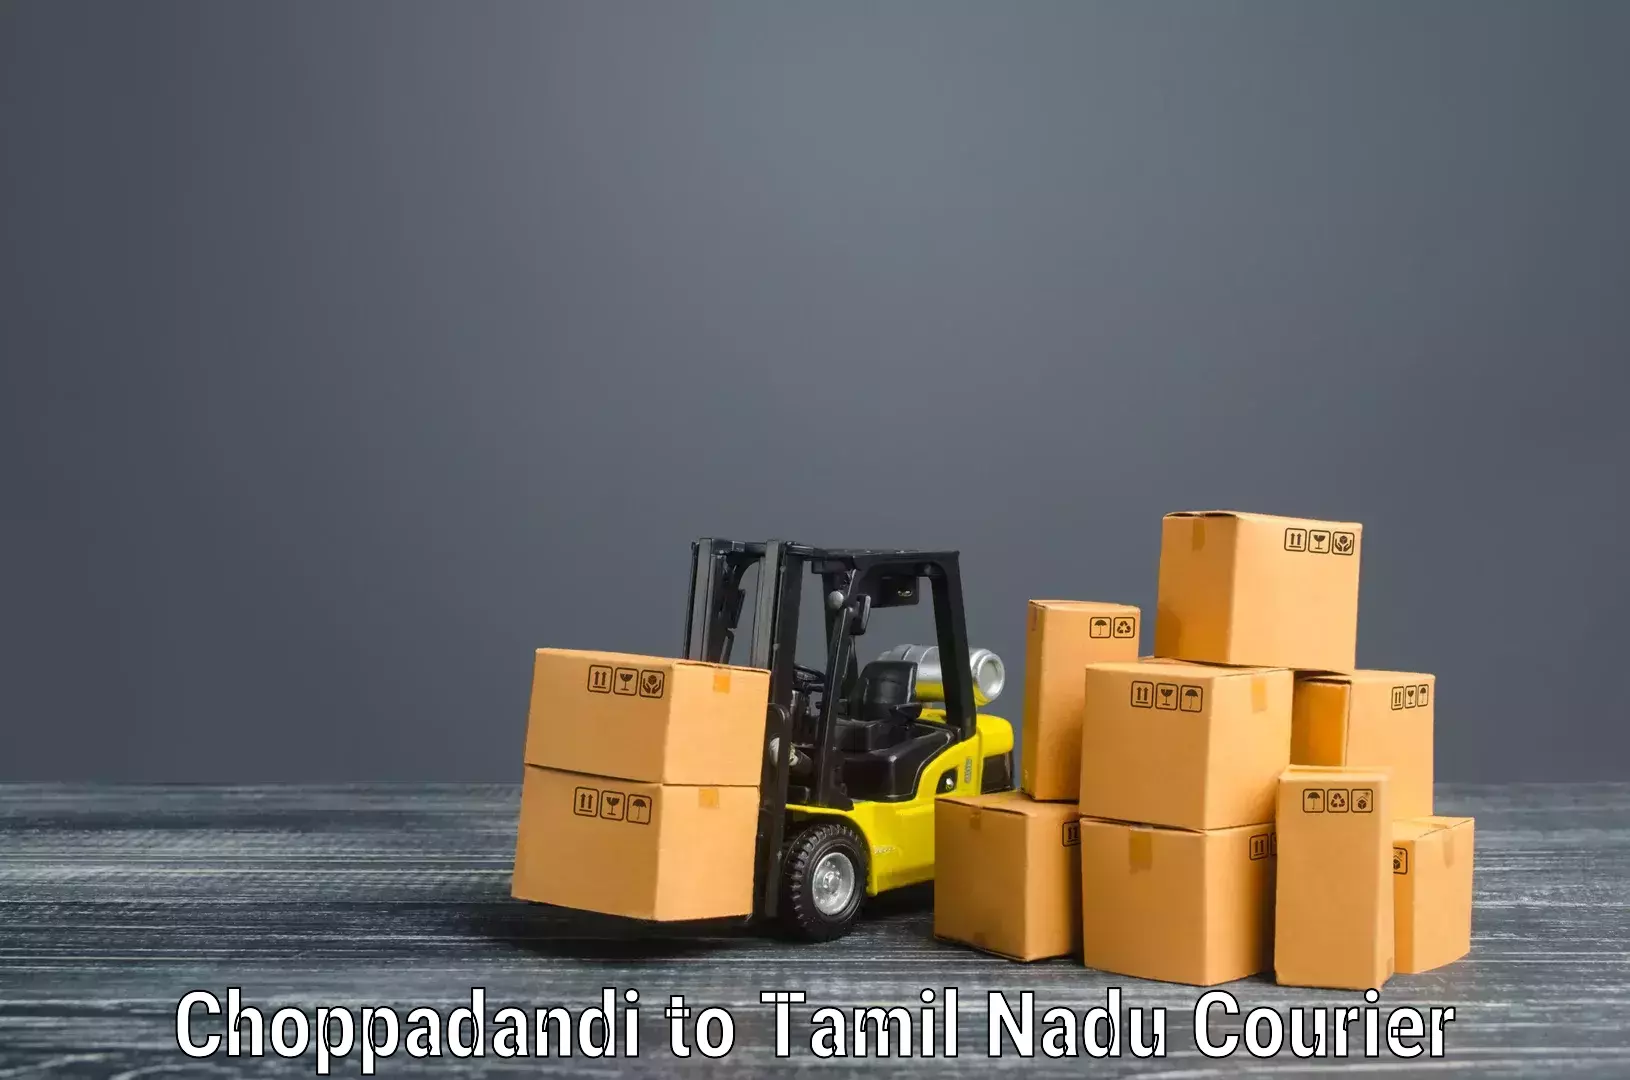 Furniture delivery service Choppadandi to Anthiyur